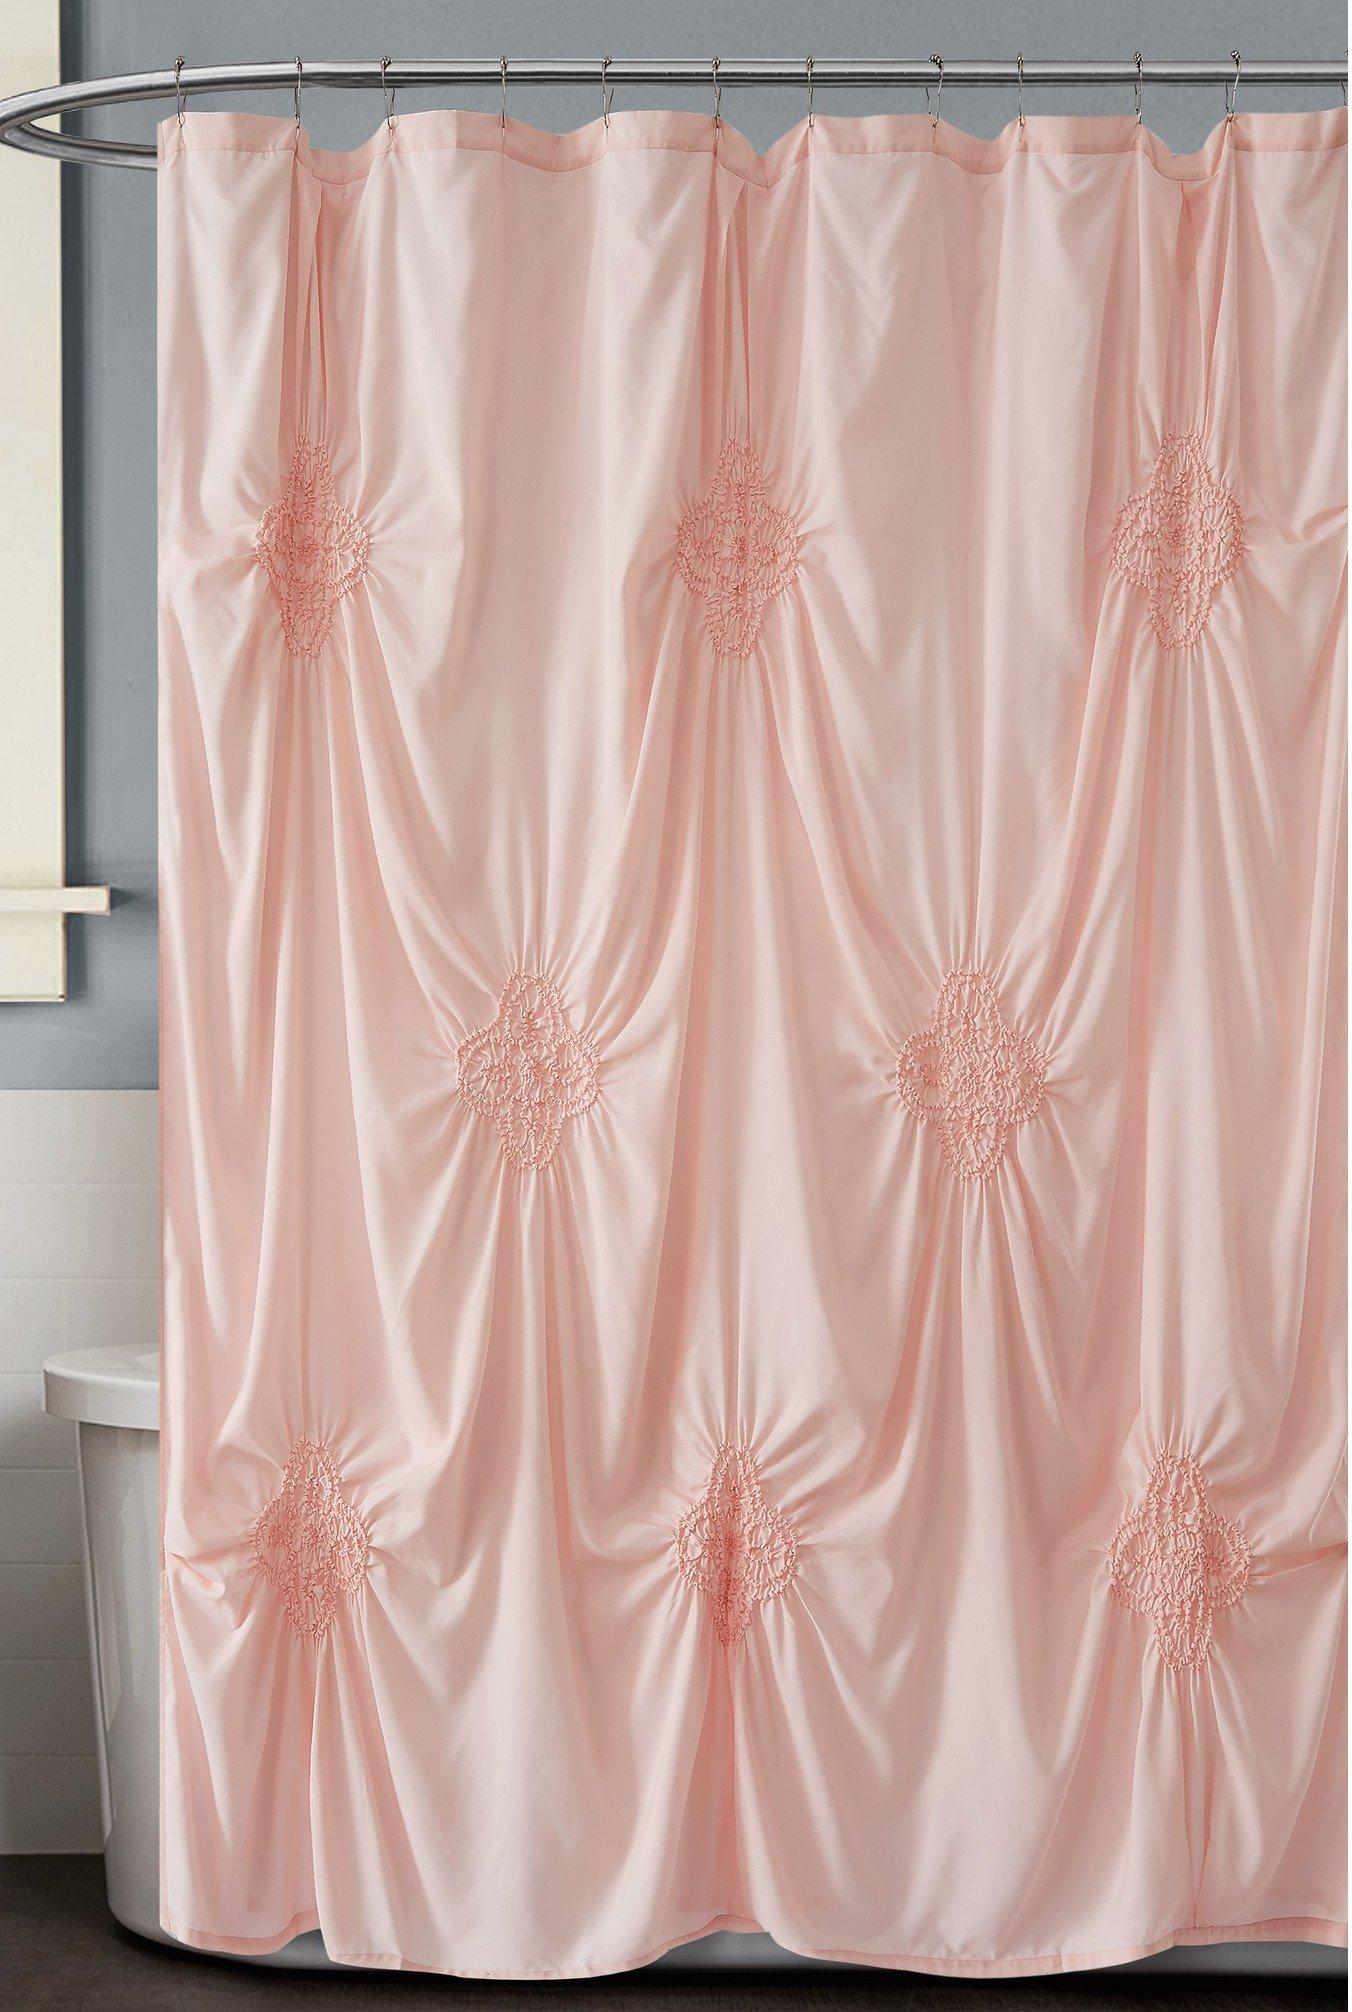 Christian Siriano NY Georgia Rouched Shower Curtain